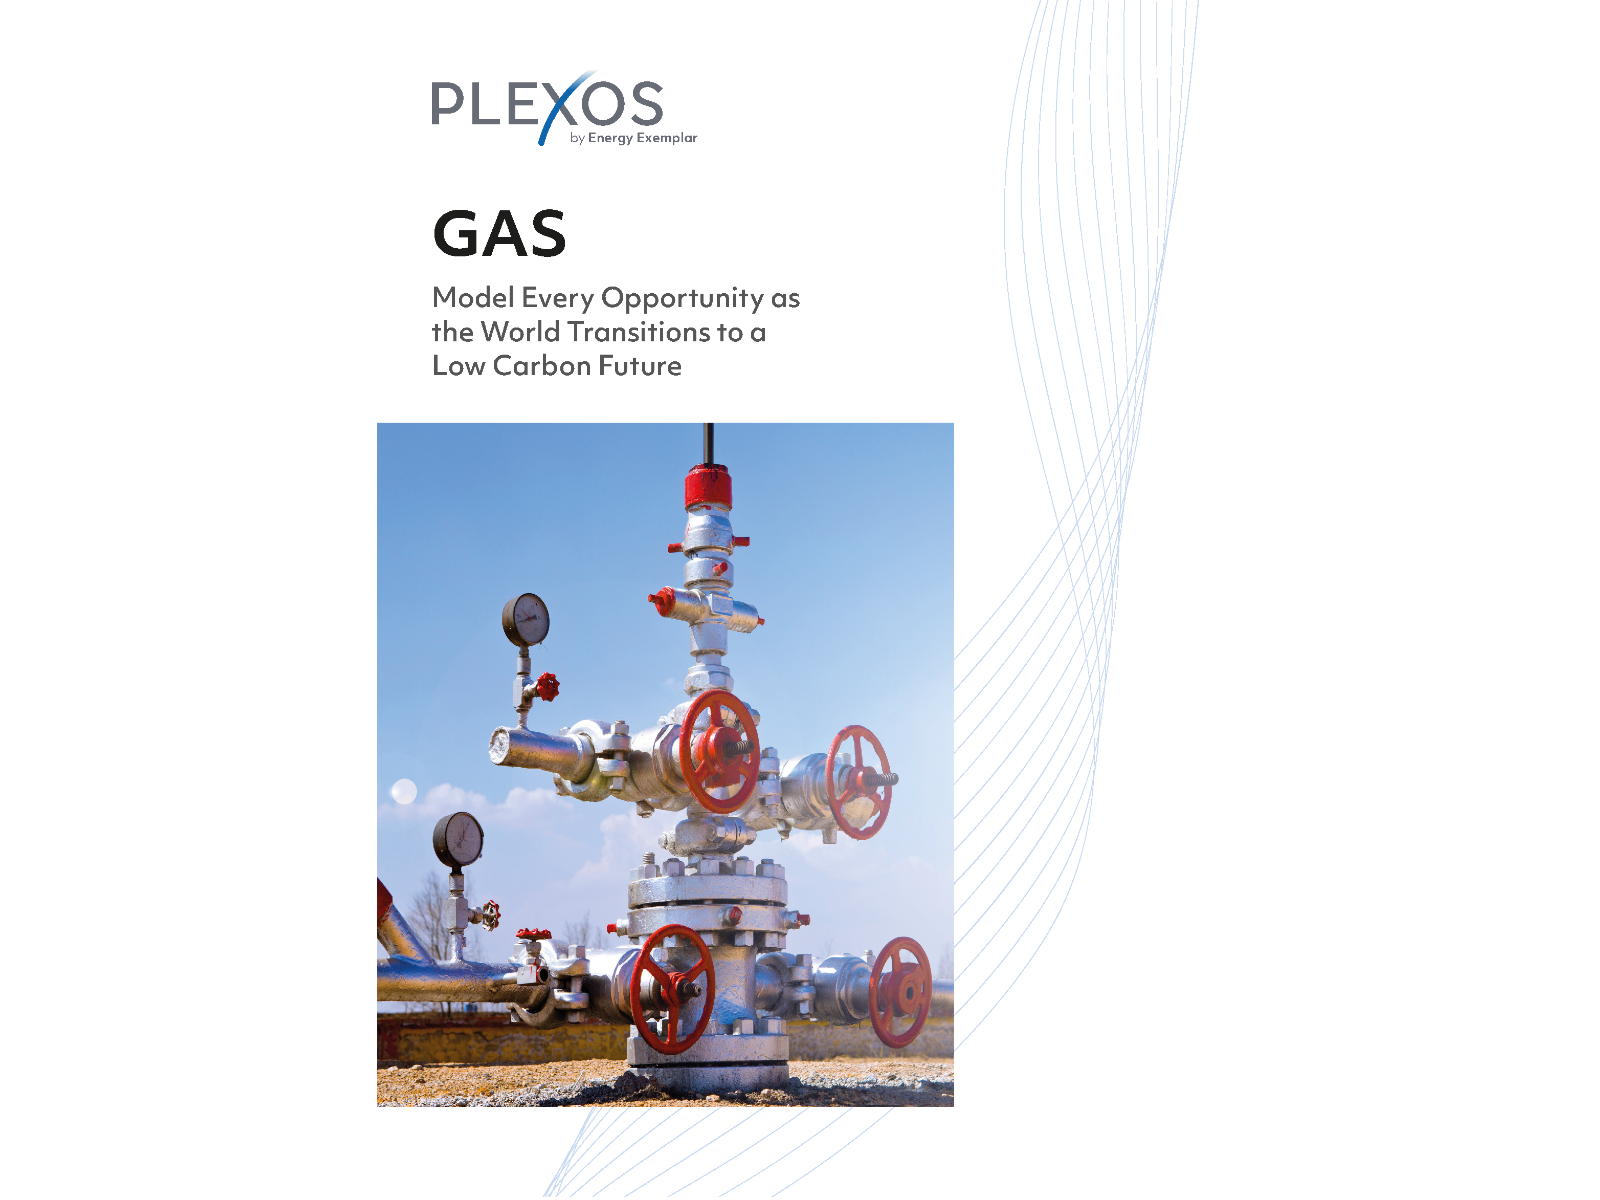 PLEXOS Gas brochure cover